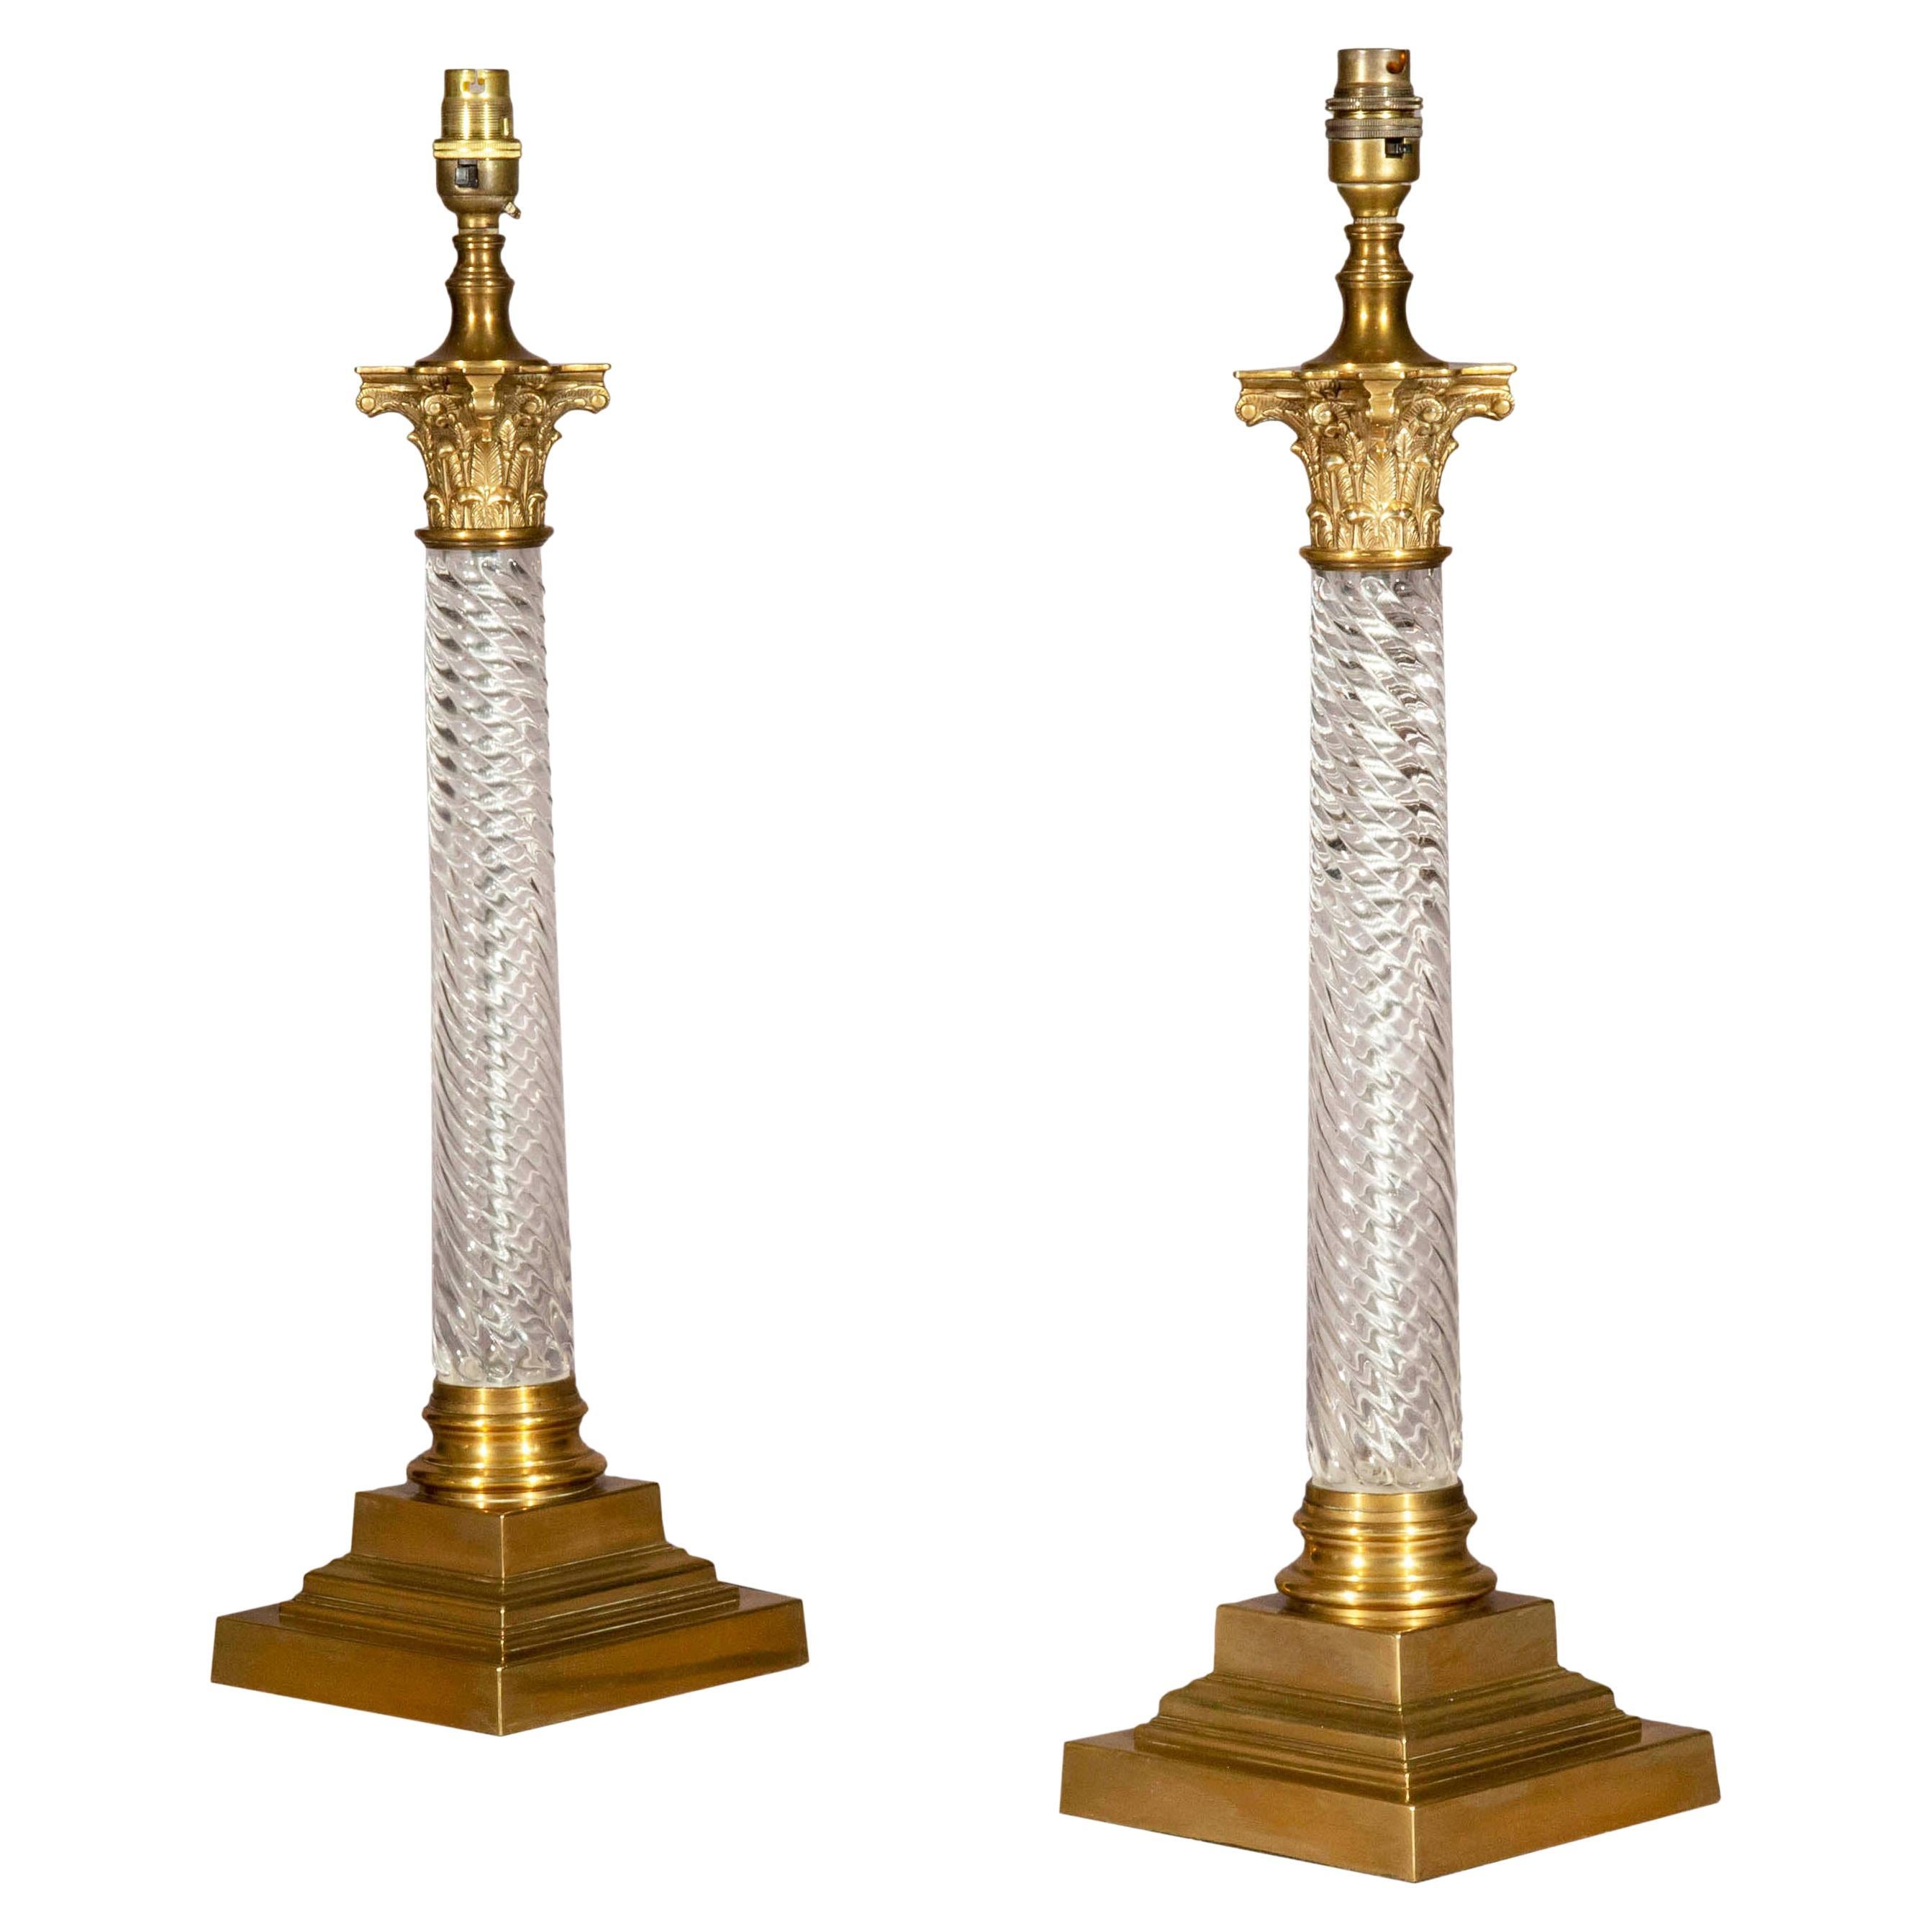 Pair of Crystal and Brass Corinthian Column Table Lamps Vaughan Design